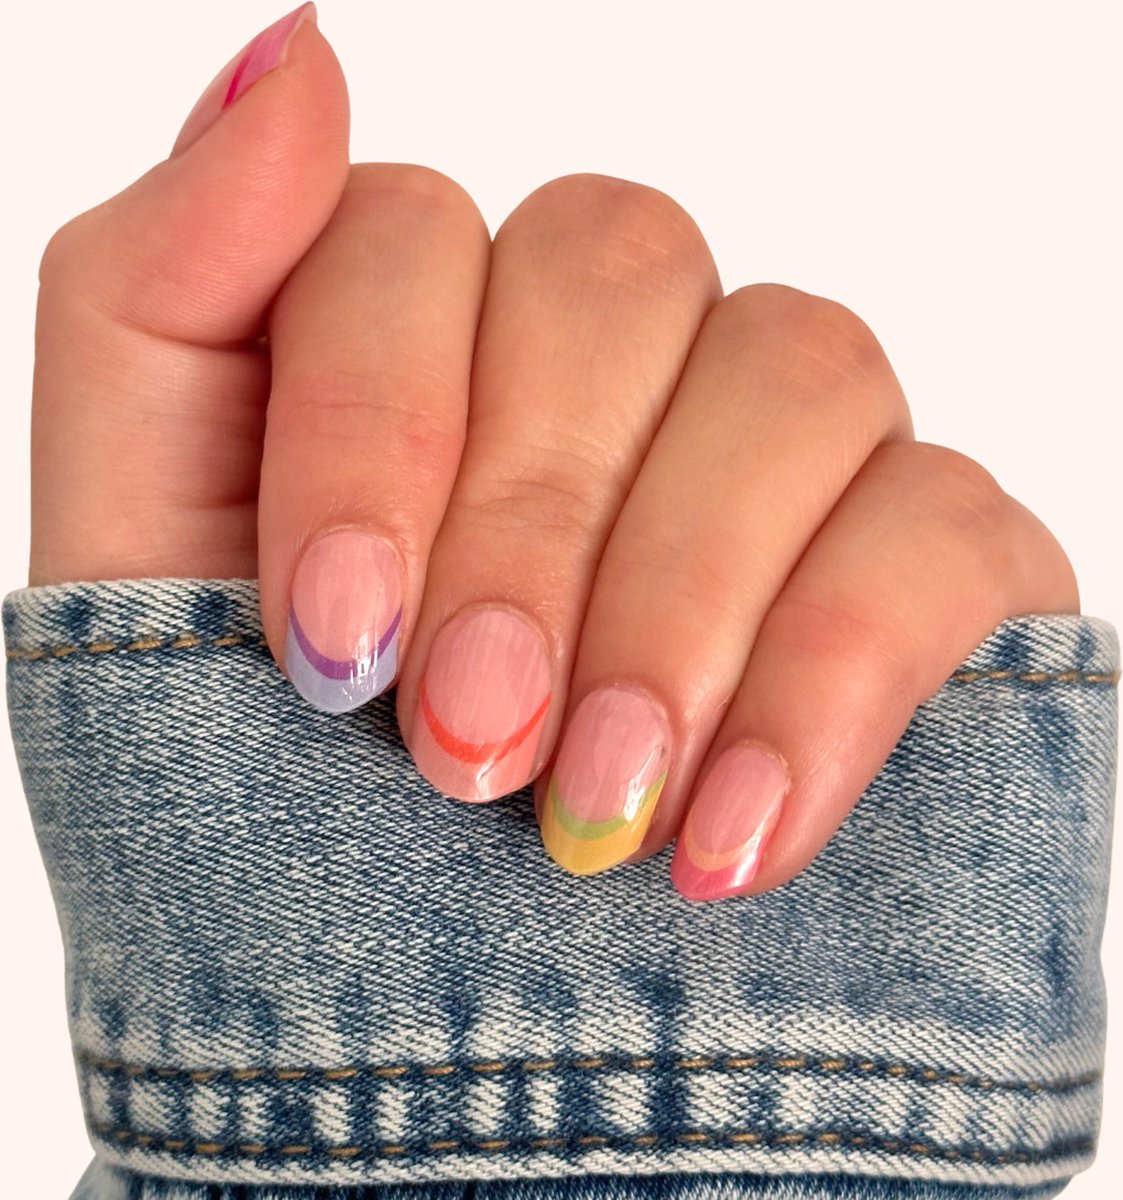 BIMA Nails - Gellak Nagel Stickers - Gel Nagel Wraps - Nail Art - Pastel Colors - French Manicure - Pastel Color Tips